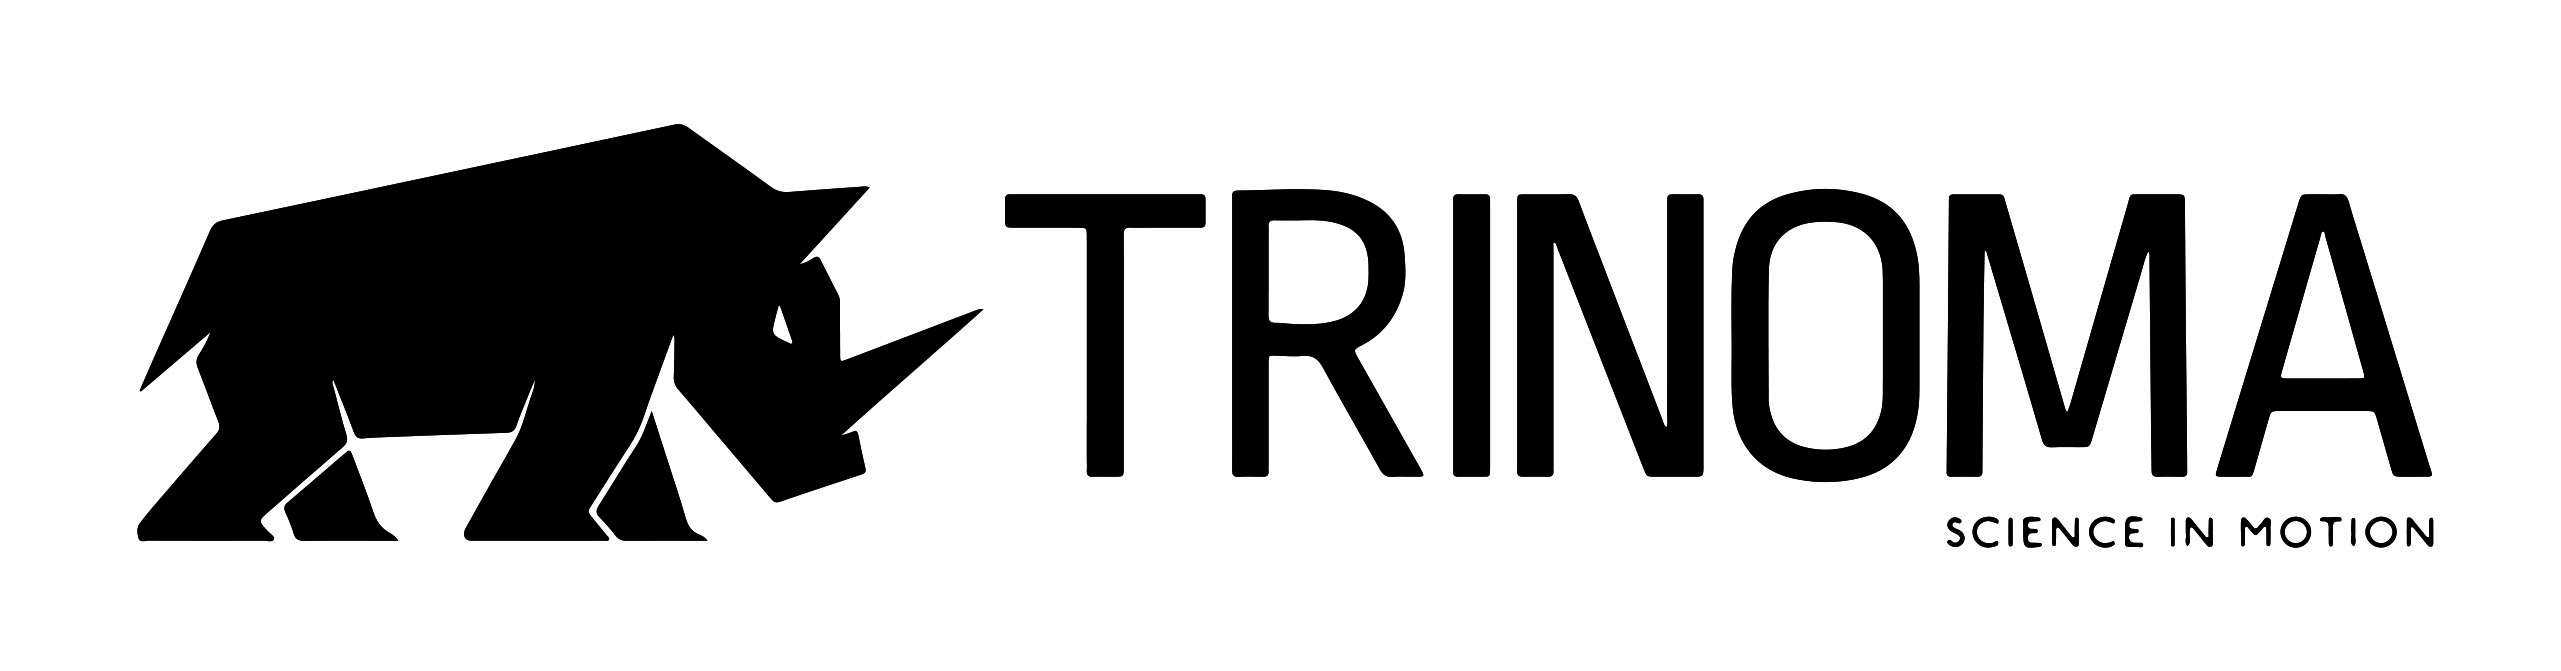 Trinoma